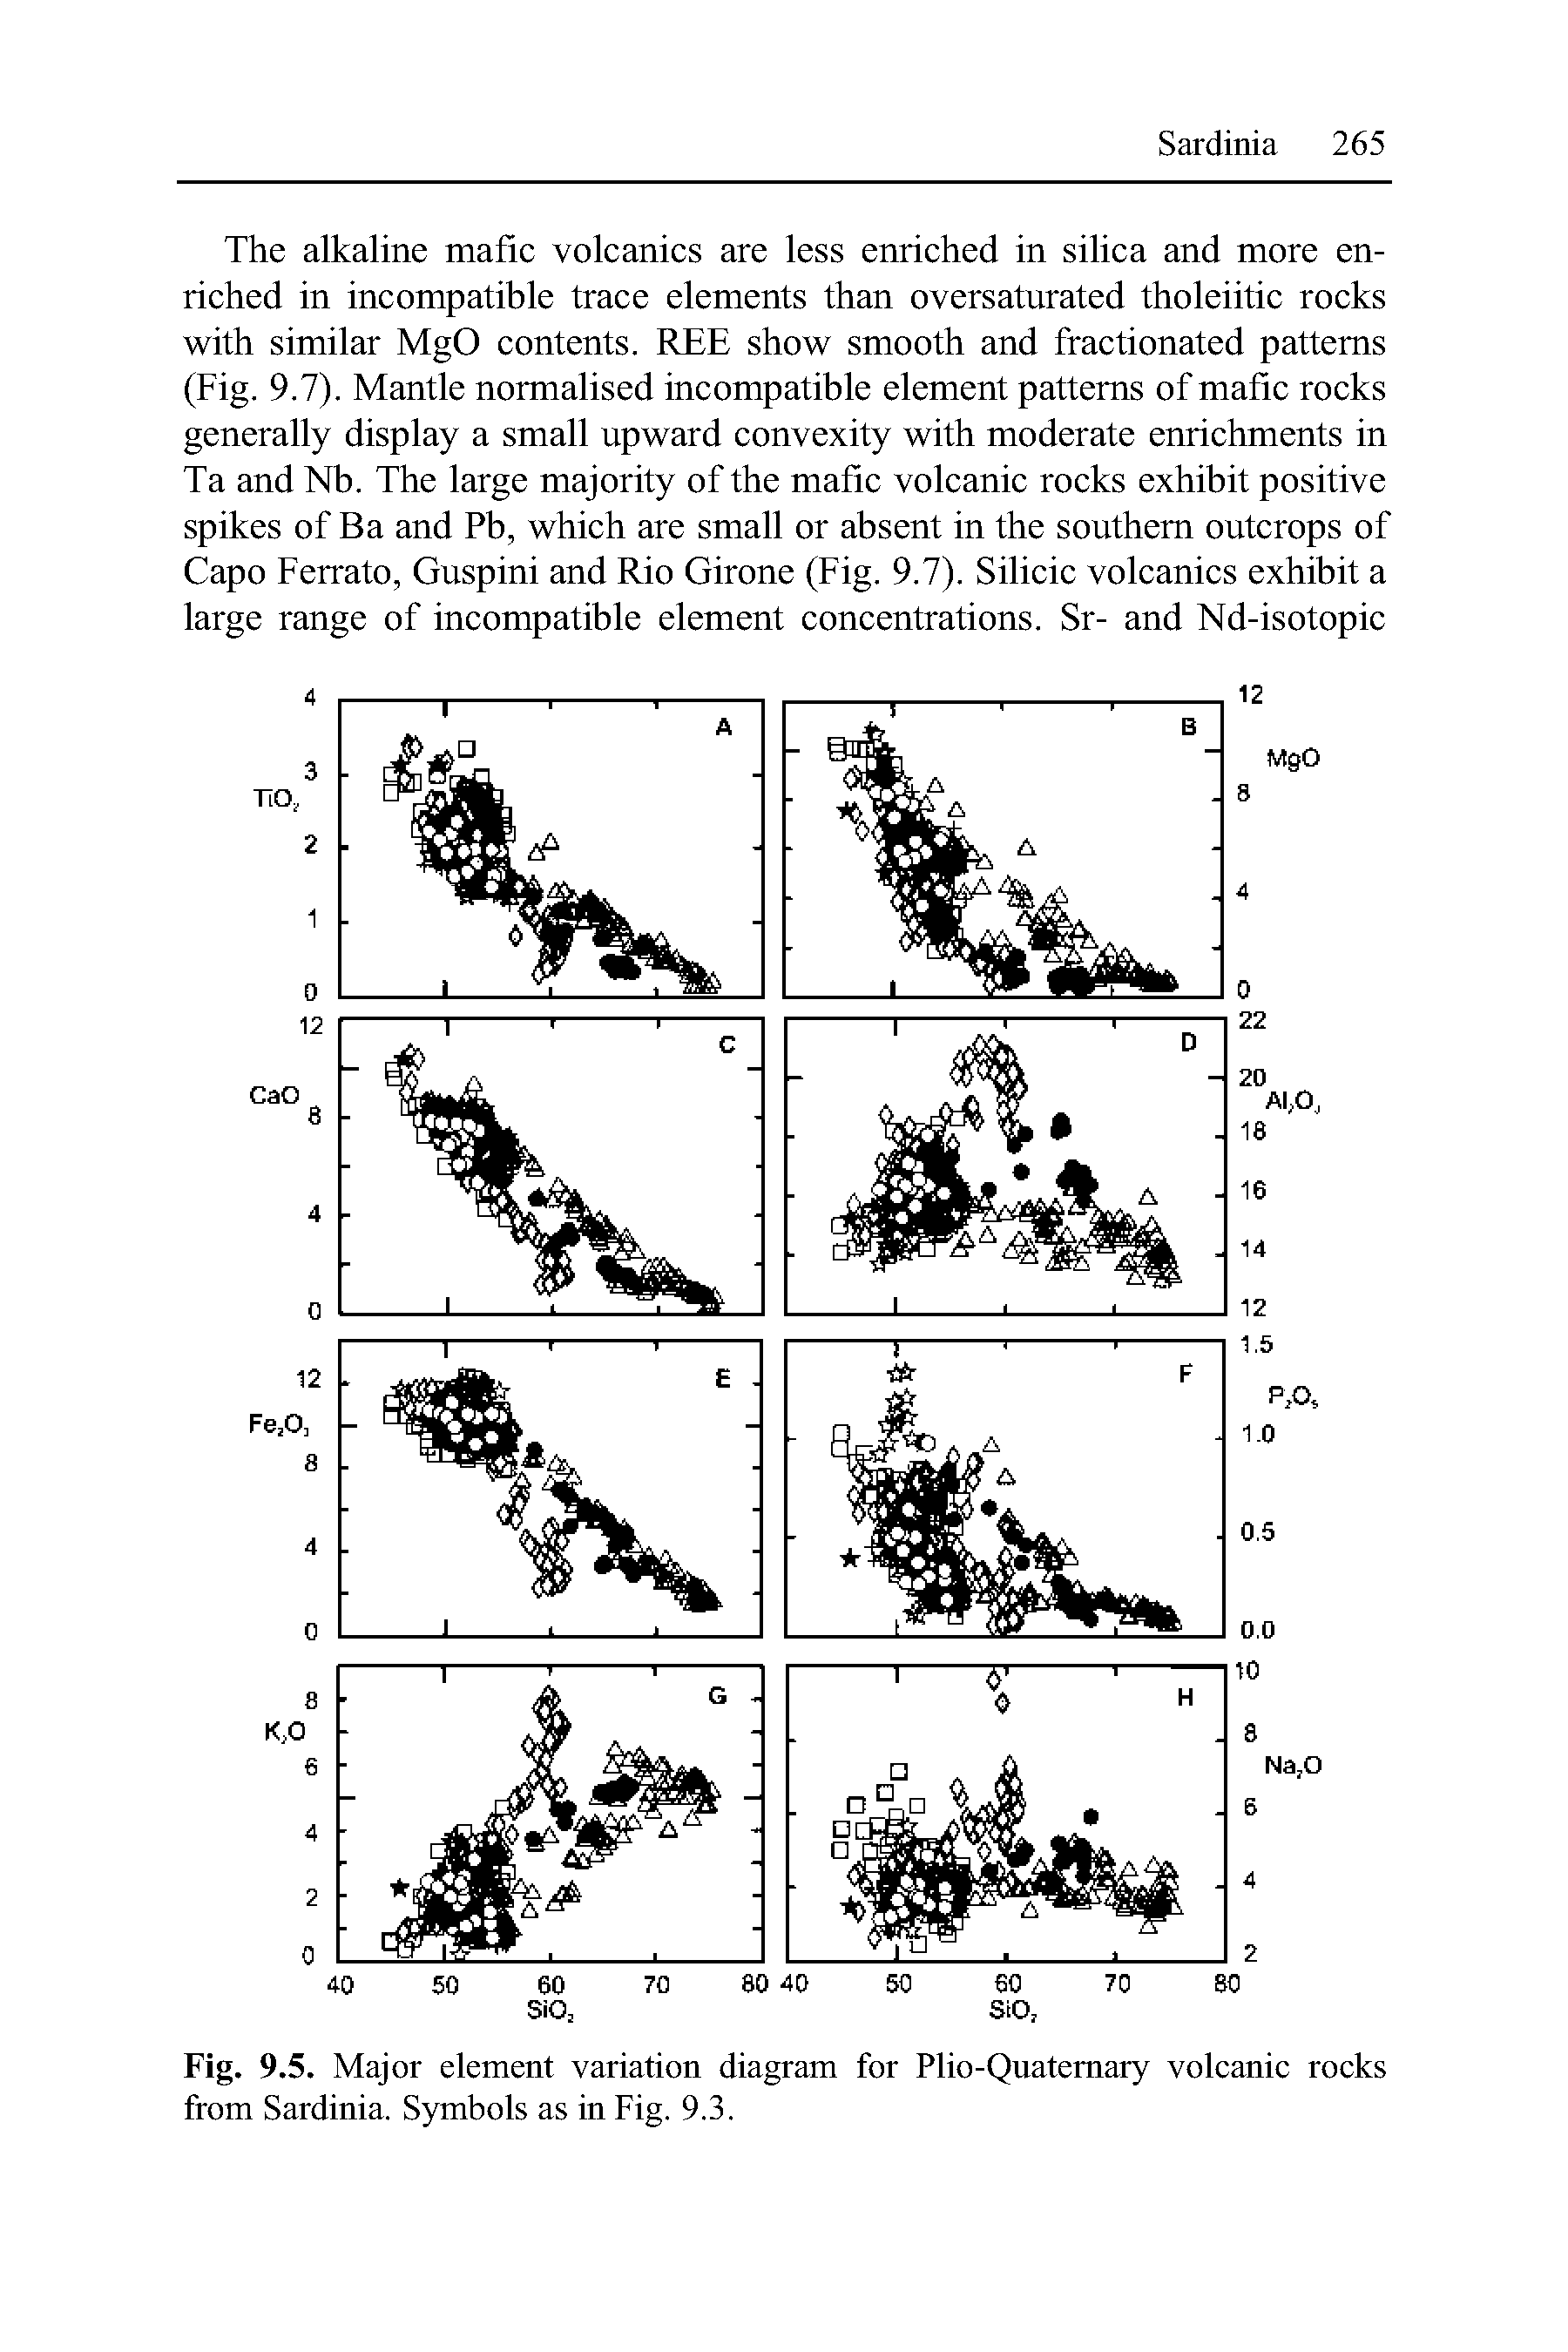 Fig. 9.5. Major element variation diagram for Plio-Quatemary volcanic rocks from Sardinia. Symbols as in Fig. 9.3.